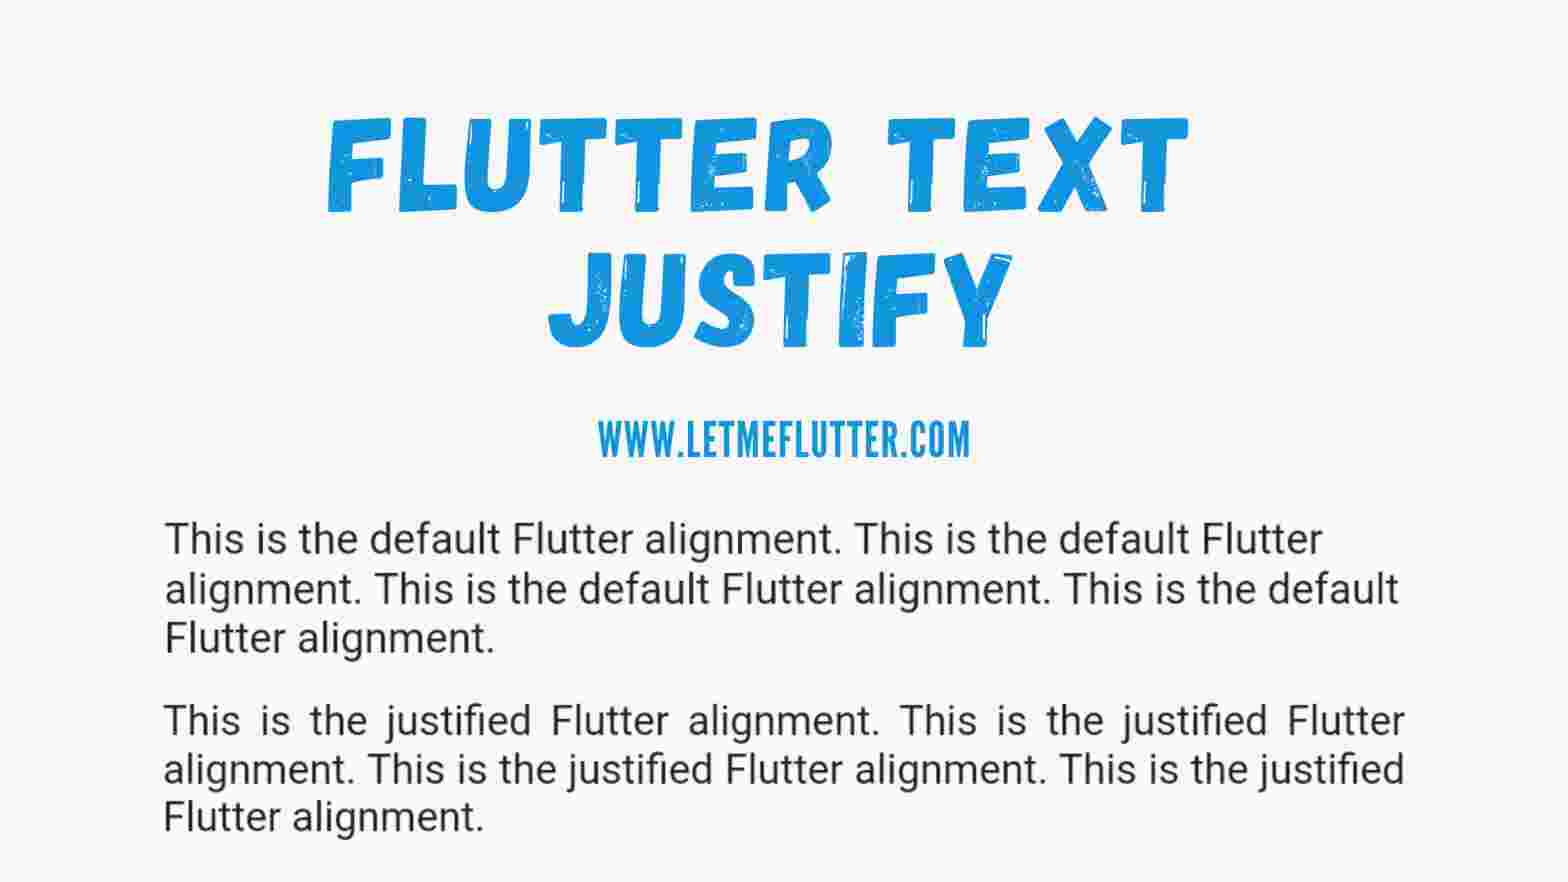 Flutter text justify